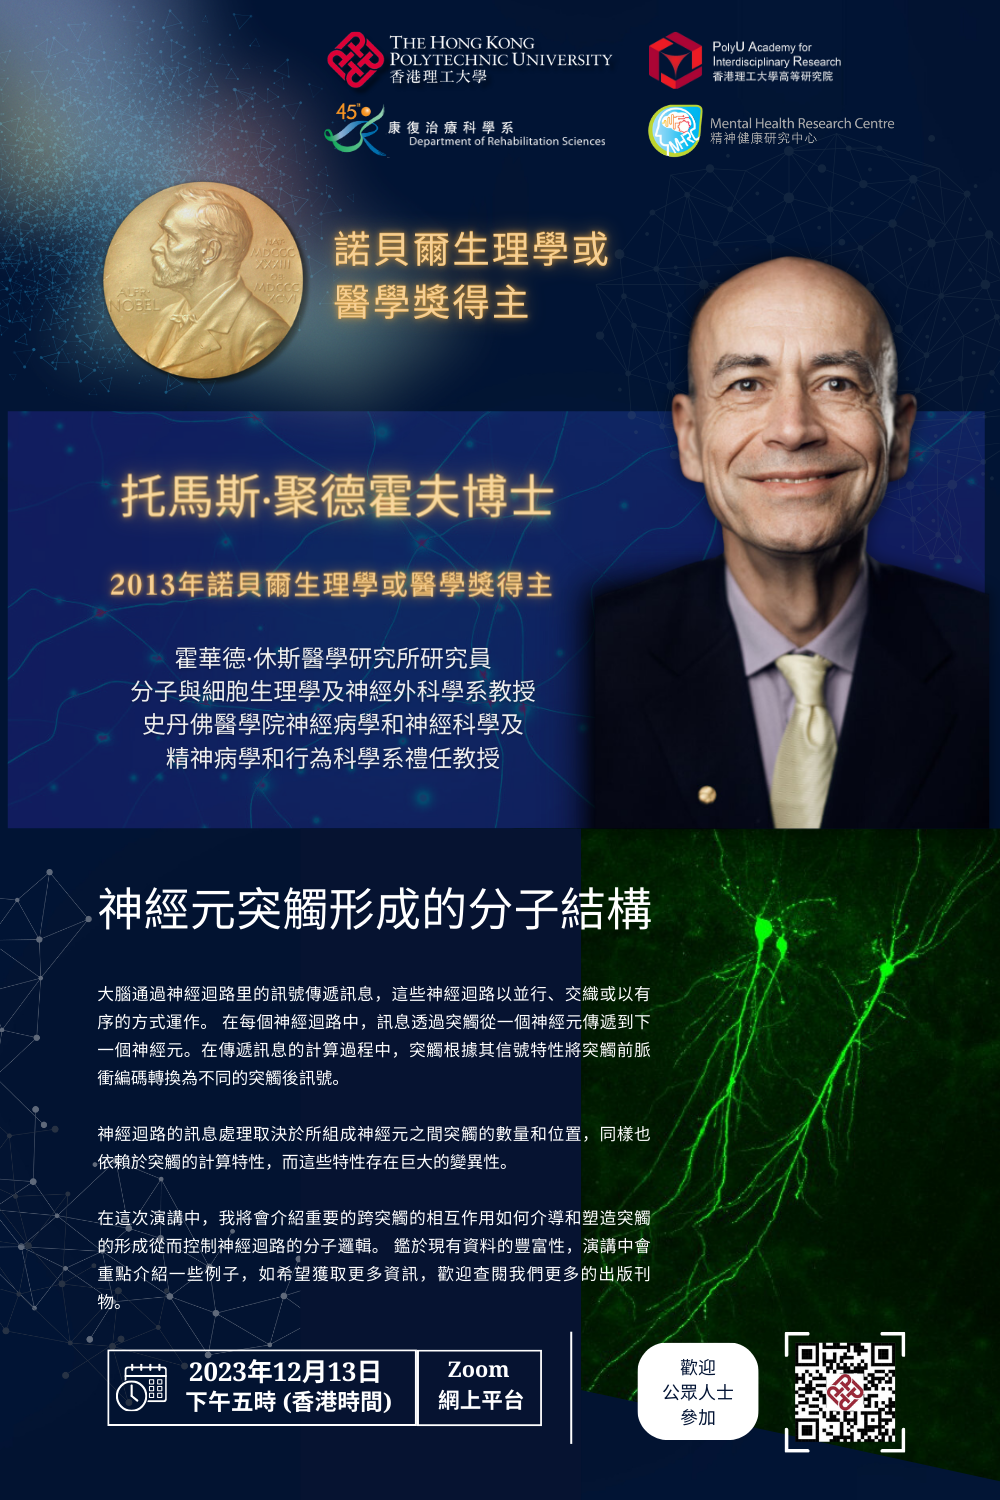 MHRC Nobel Laureate Lecture202312131 1000 x 1500 pxTC